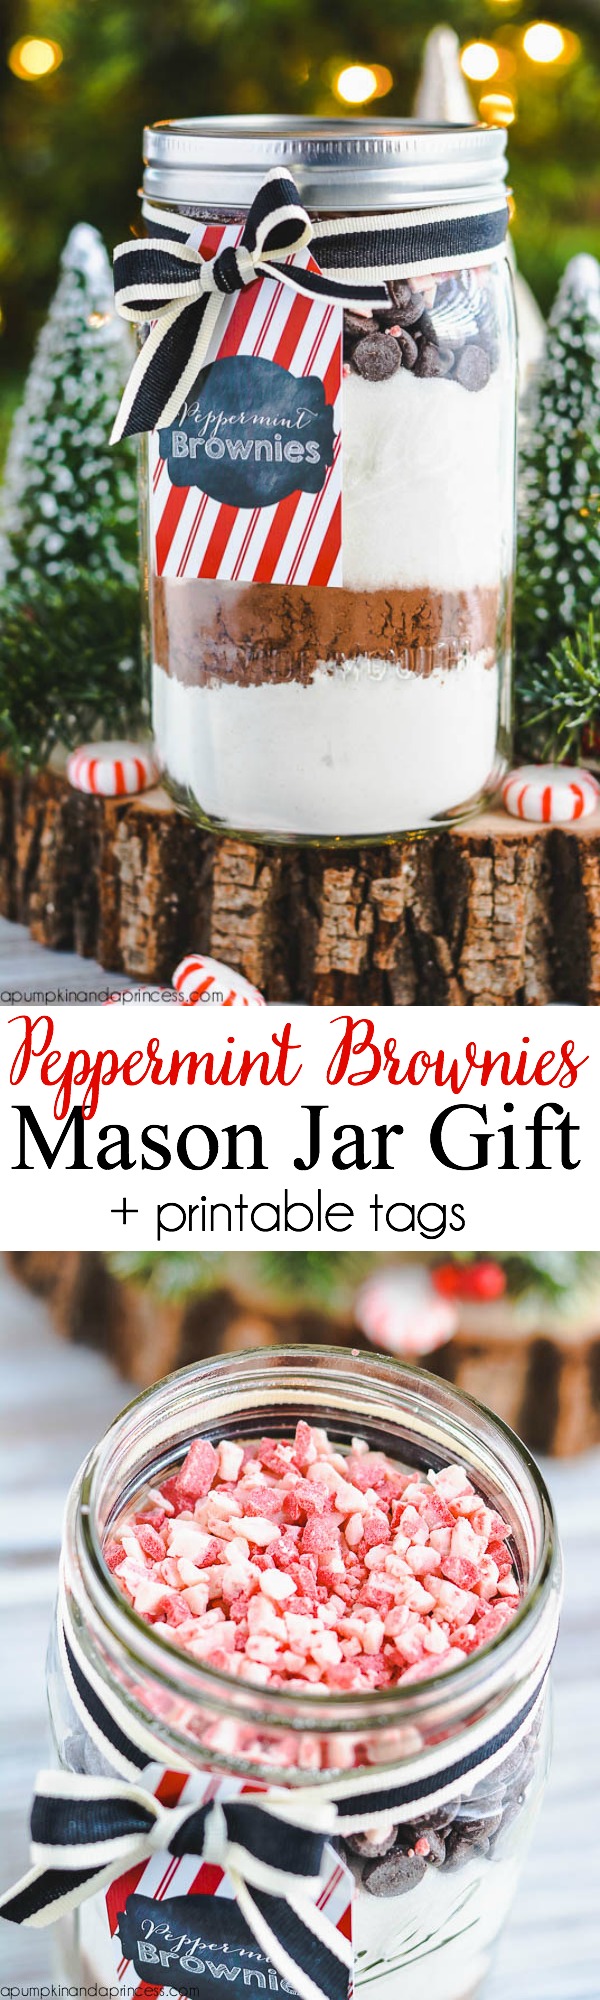 Peppermint-Brownie-Mix-Mason-Jar-Gift